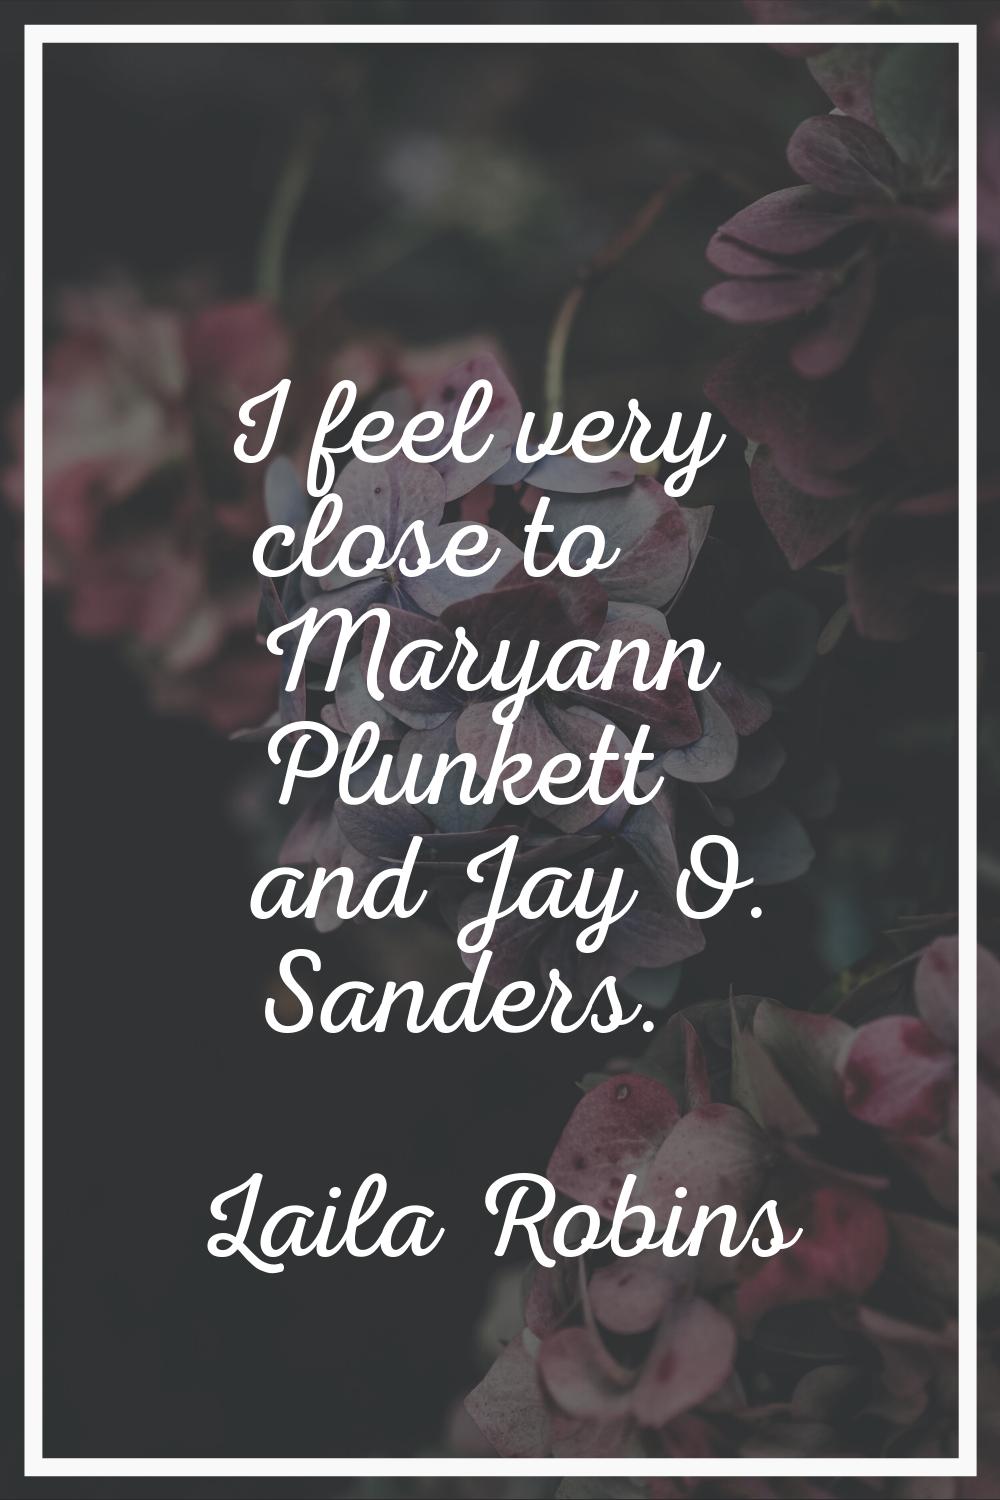 I feel very close to Maryann Plunkett and Jay O. Sanders.